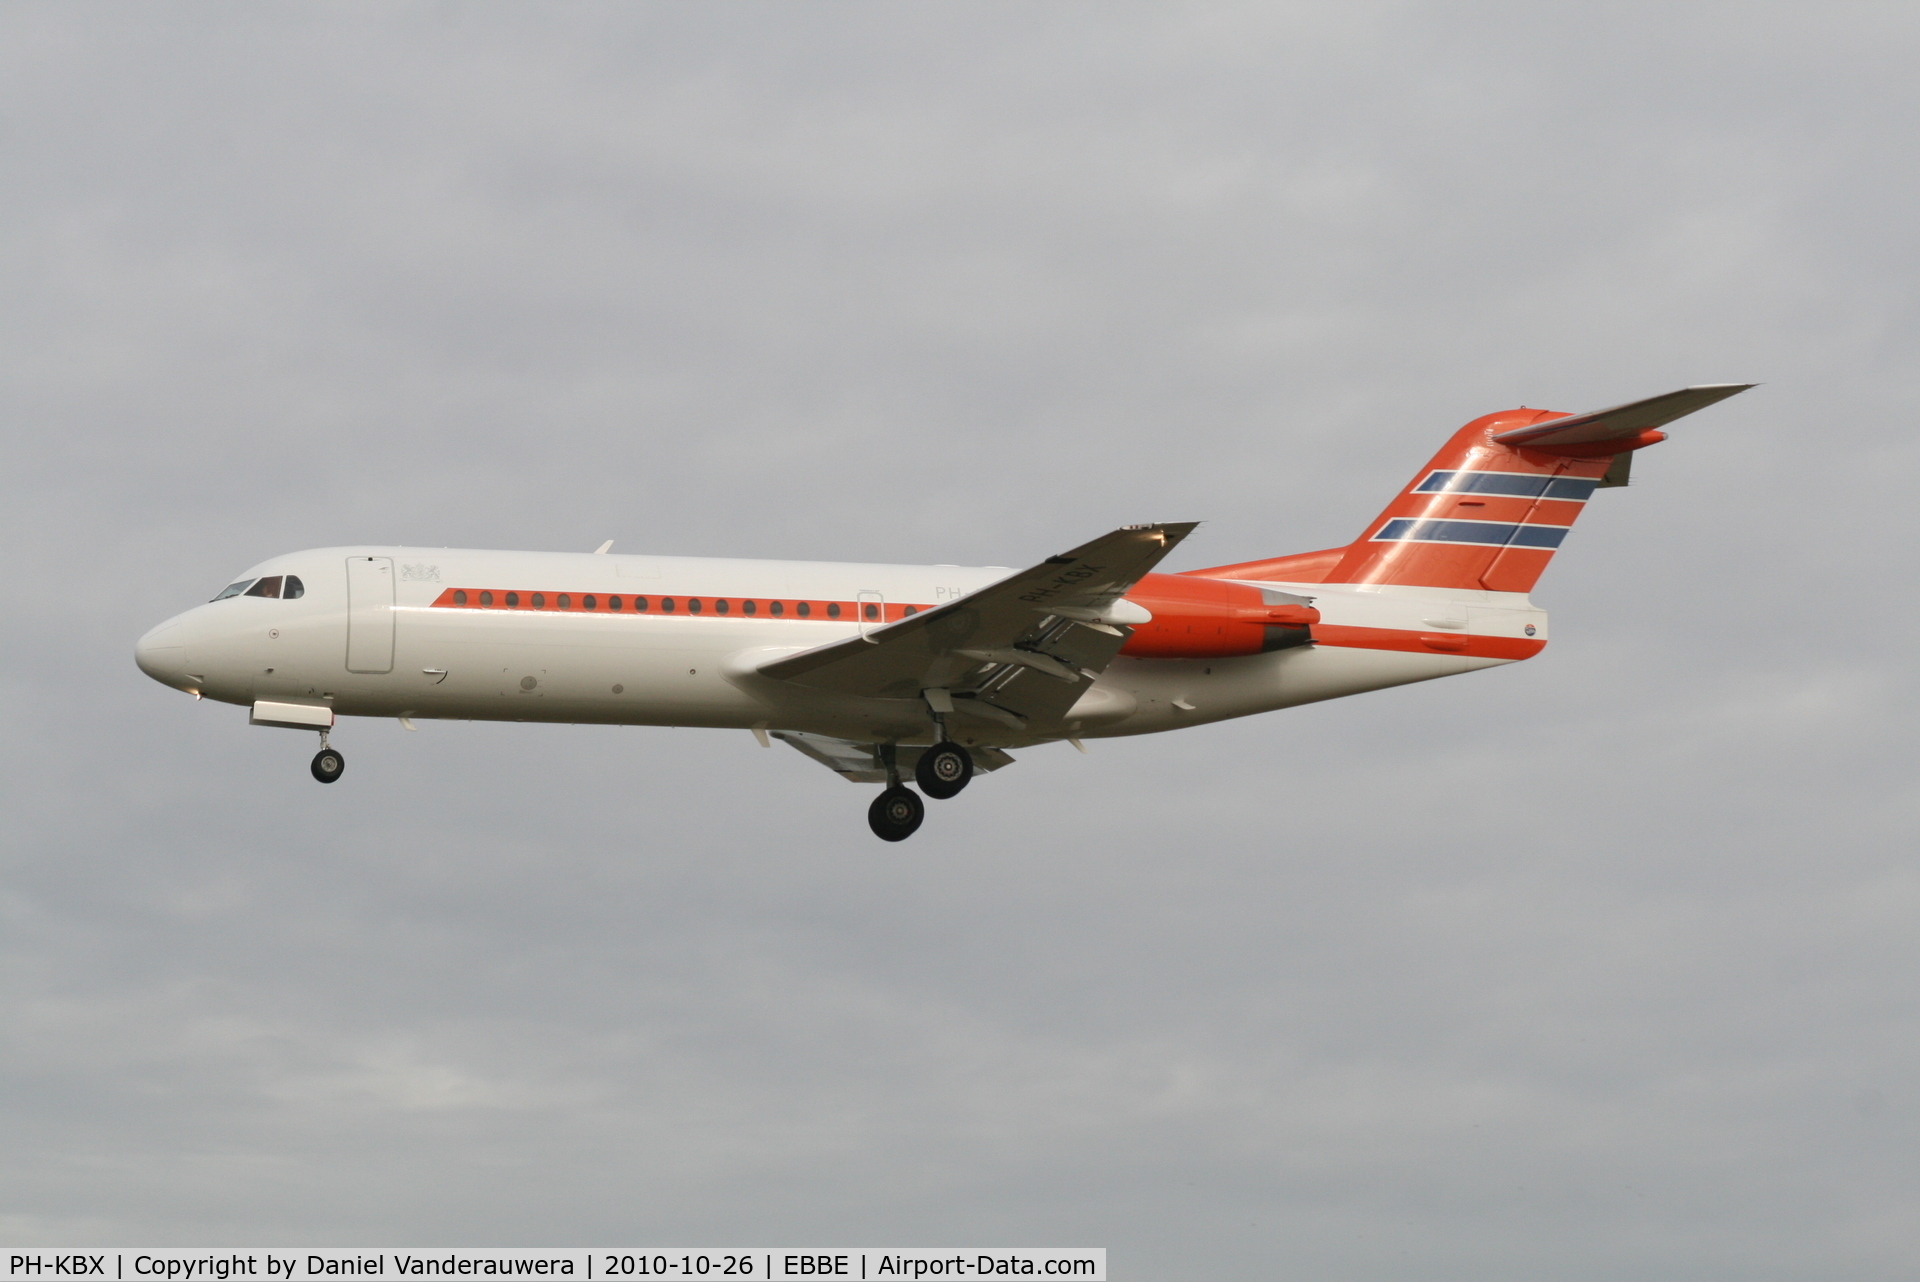 PH-KBX, 1996 Fokker 70 (F-28-0070) C/N 11547, Arrival to RWY 25L